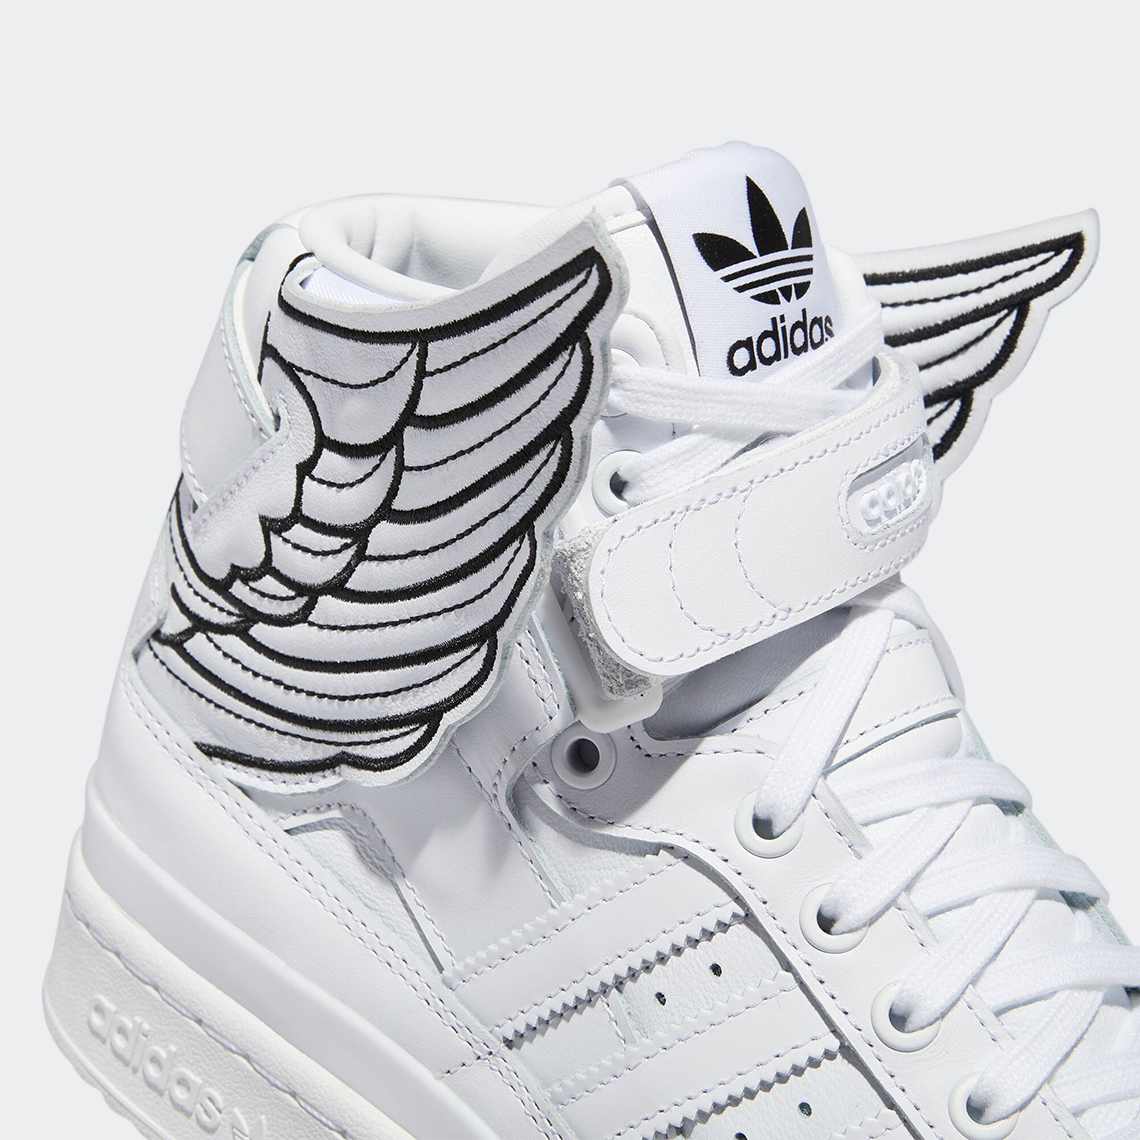 Jeremy Scott Adidas Forum Wings 4 0 White Black Gx9445 7